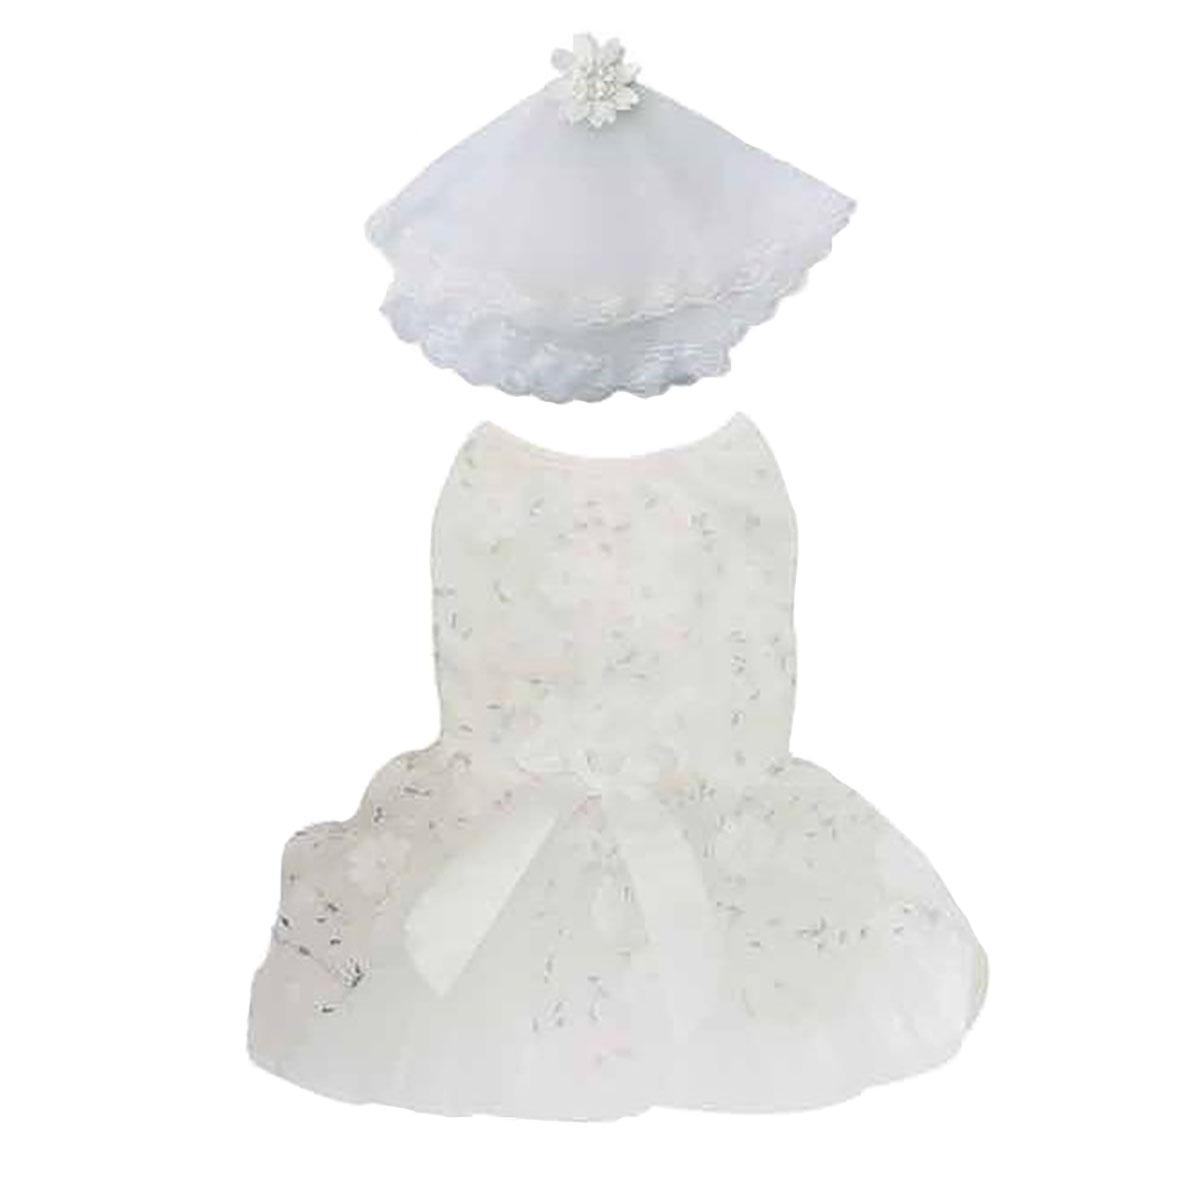 Pawpatu White Bridal Costume for Pets